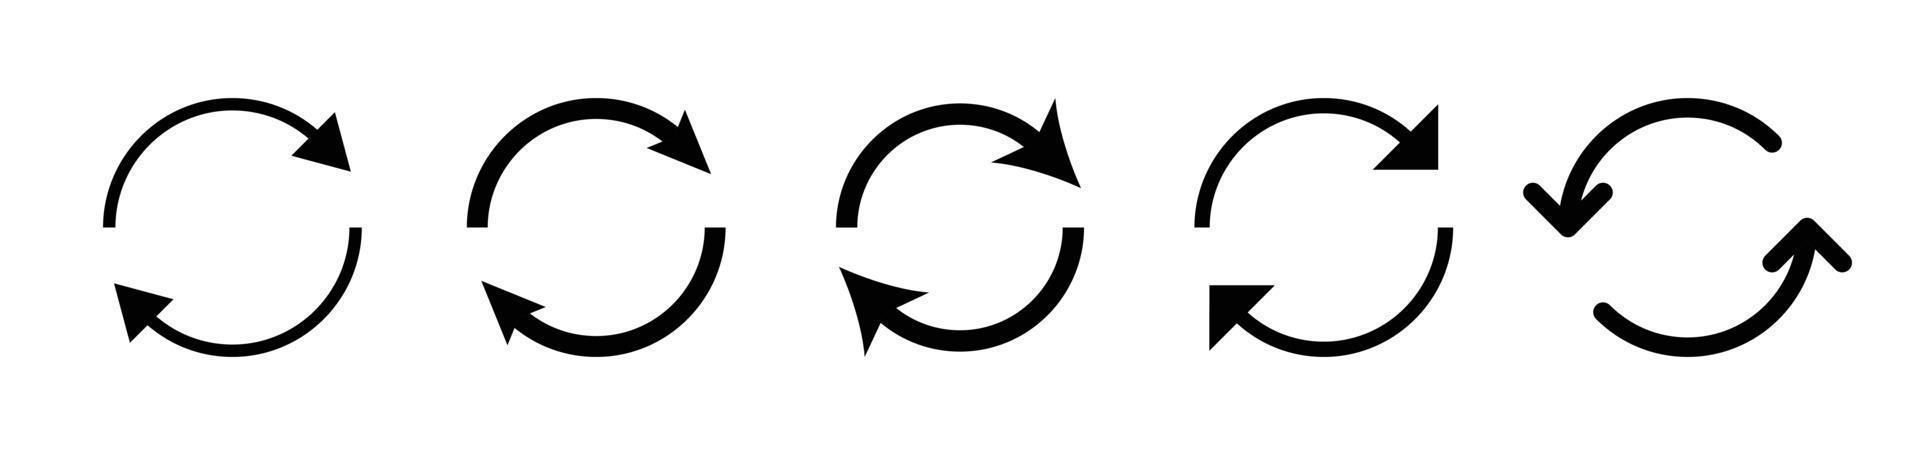 circulo doble flecha icono colocar. actualizar flecha íconos conjunto eps10 - vector